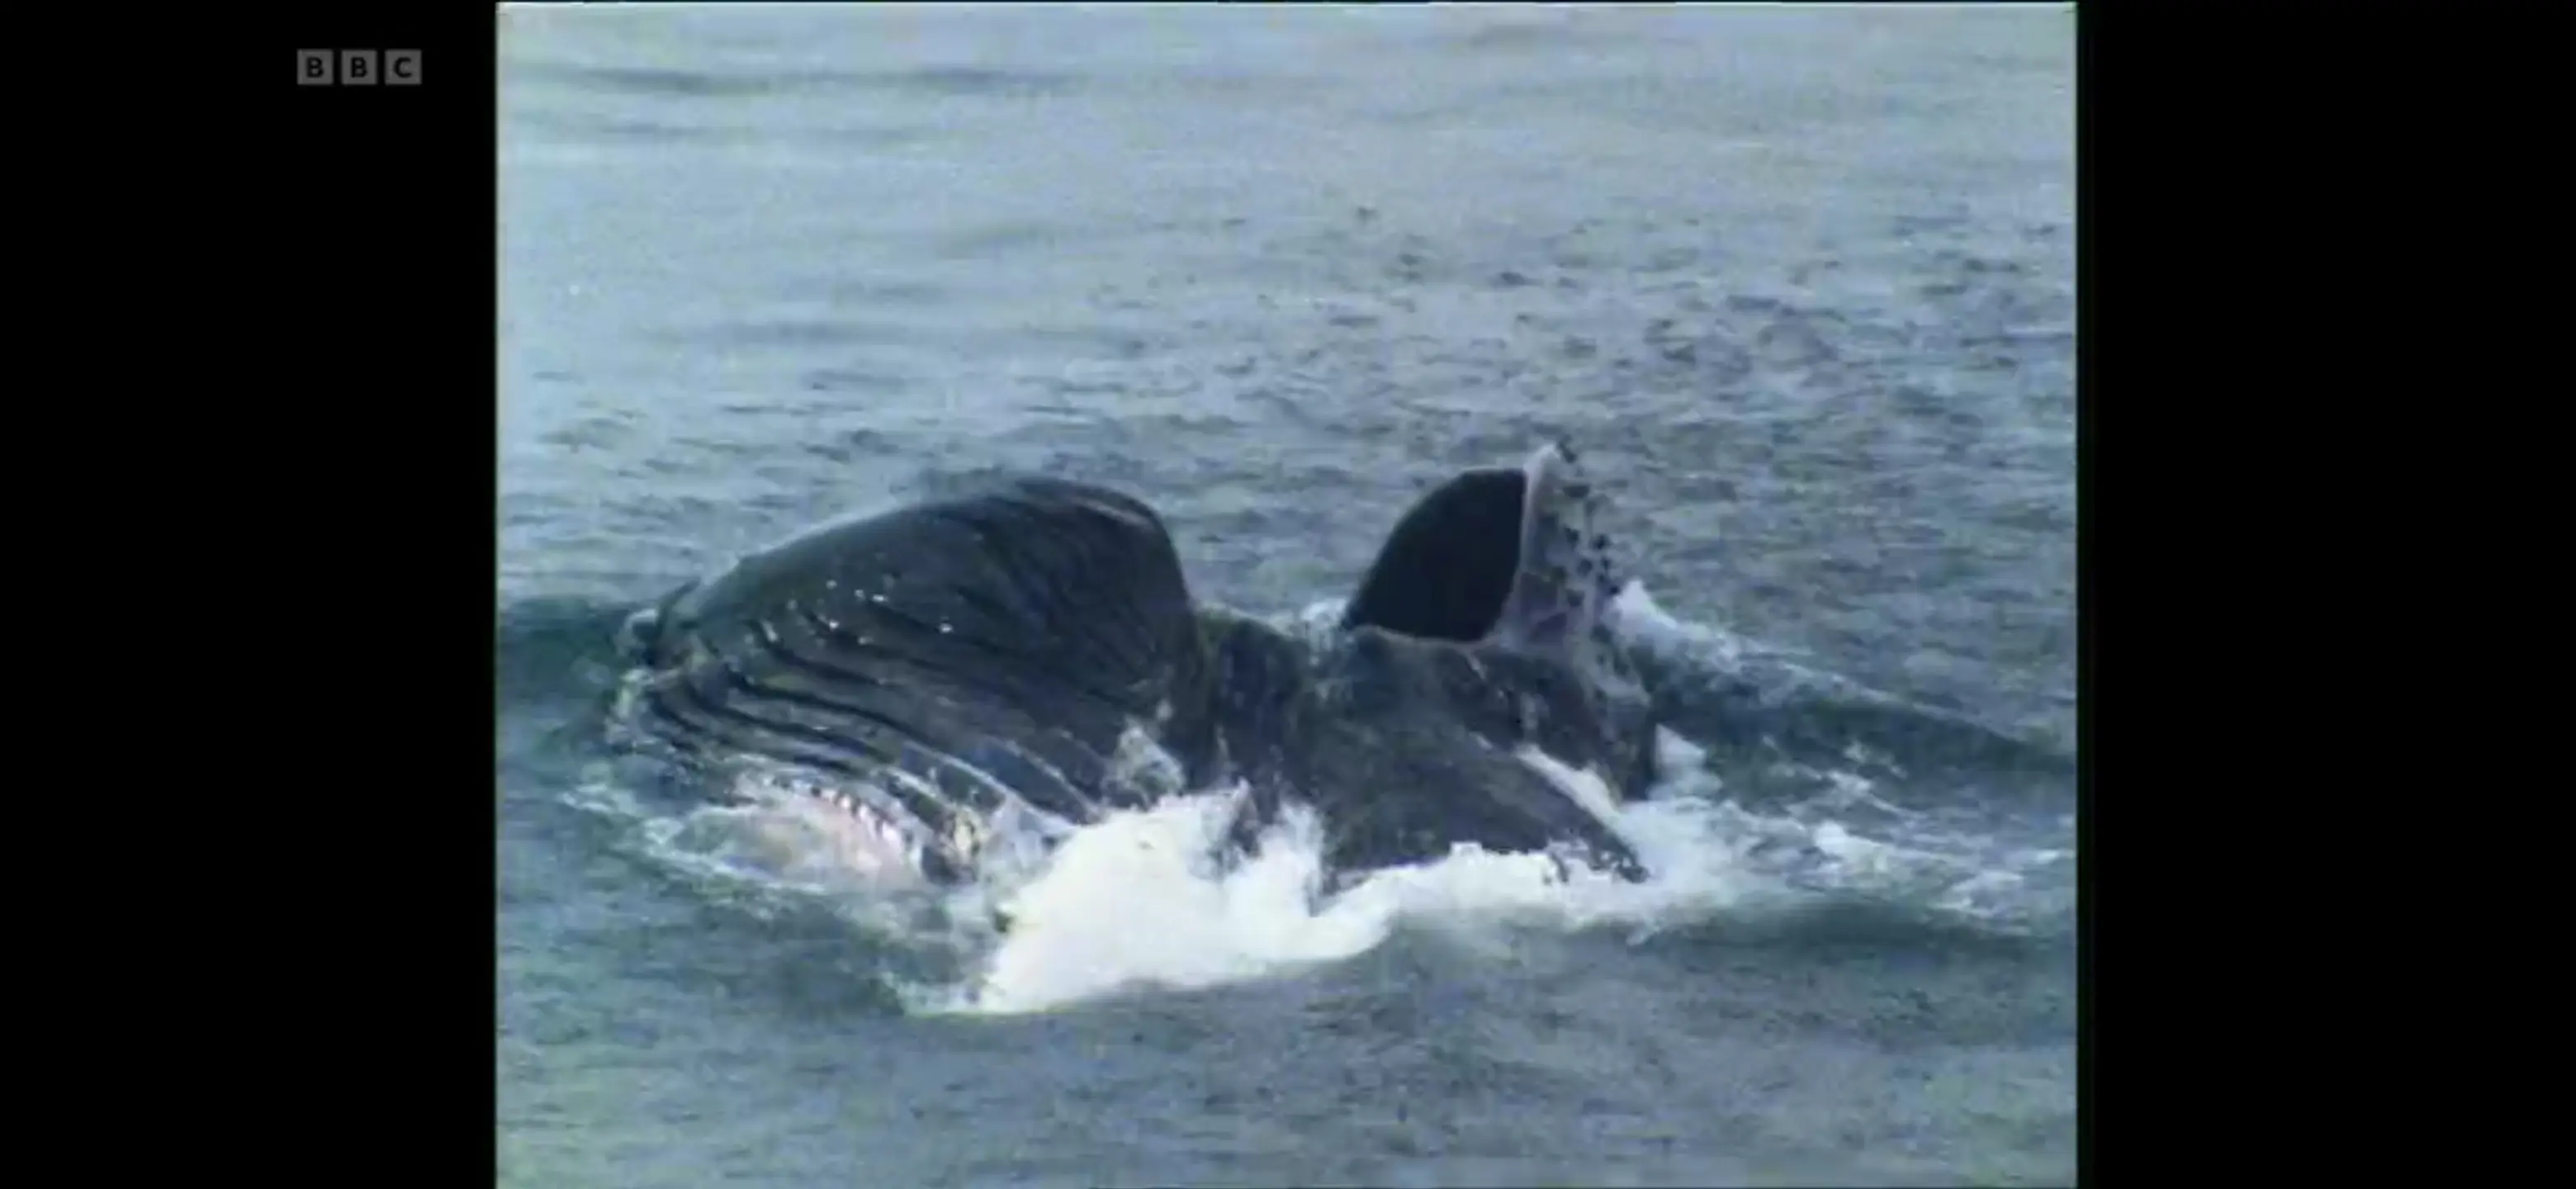 Humpback whale (Megaptera novaeangliae) as shown in Life in the Freezer - The Bountiful Sea